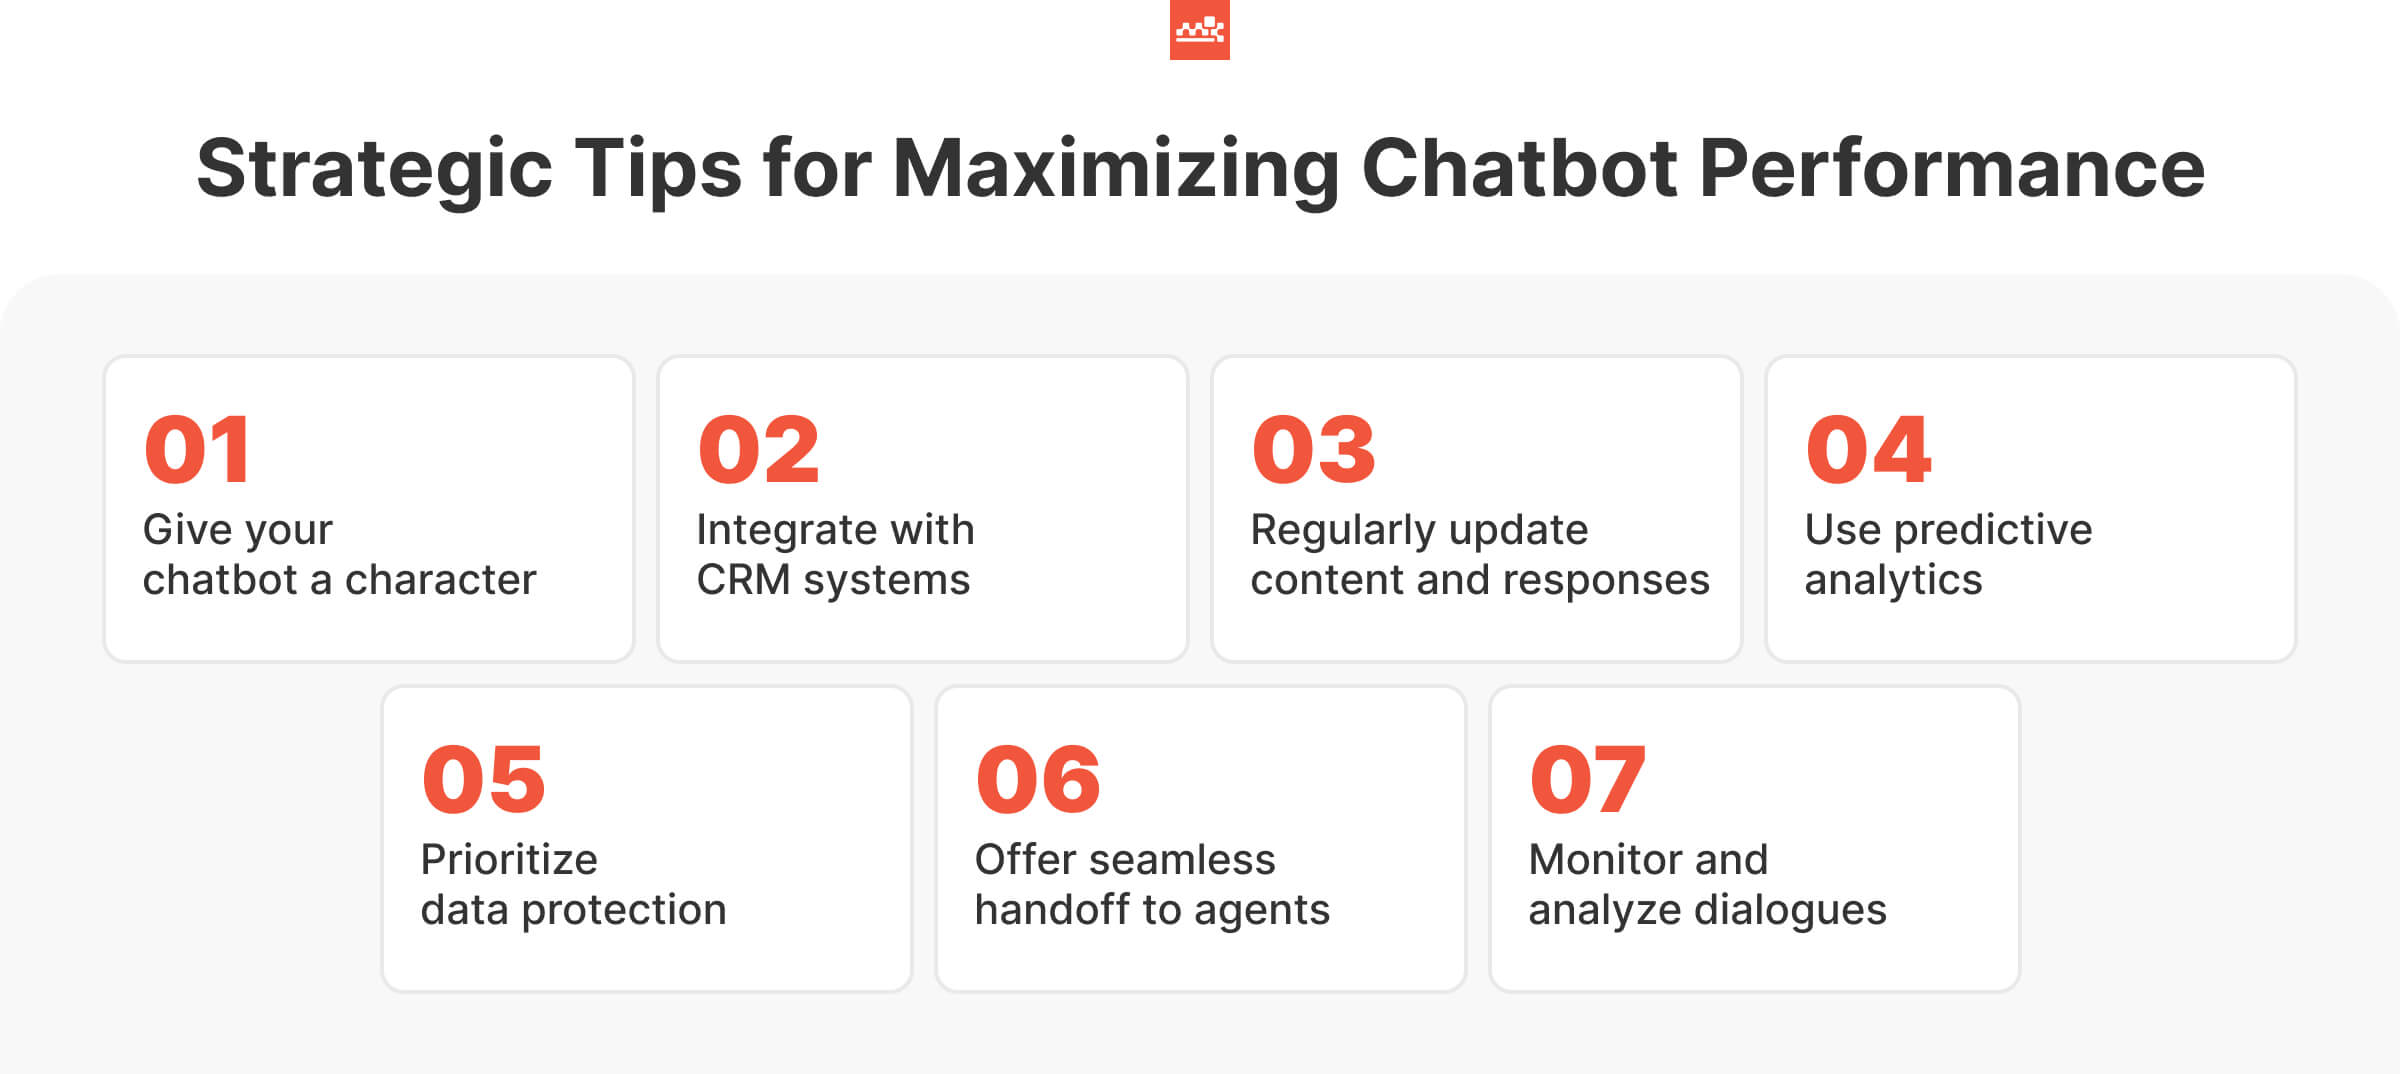 Strategic Tips for Maximizing Chatbot Performance